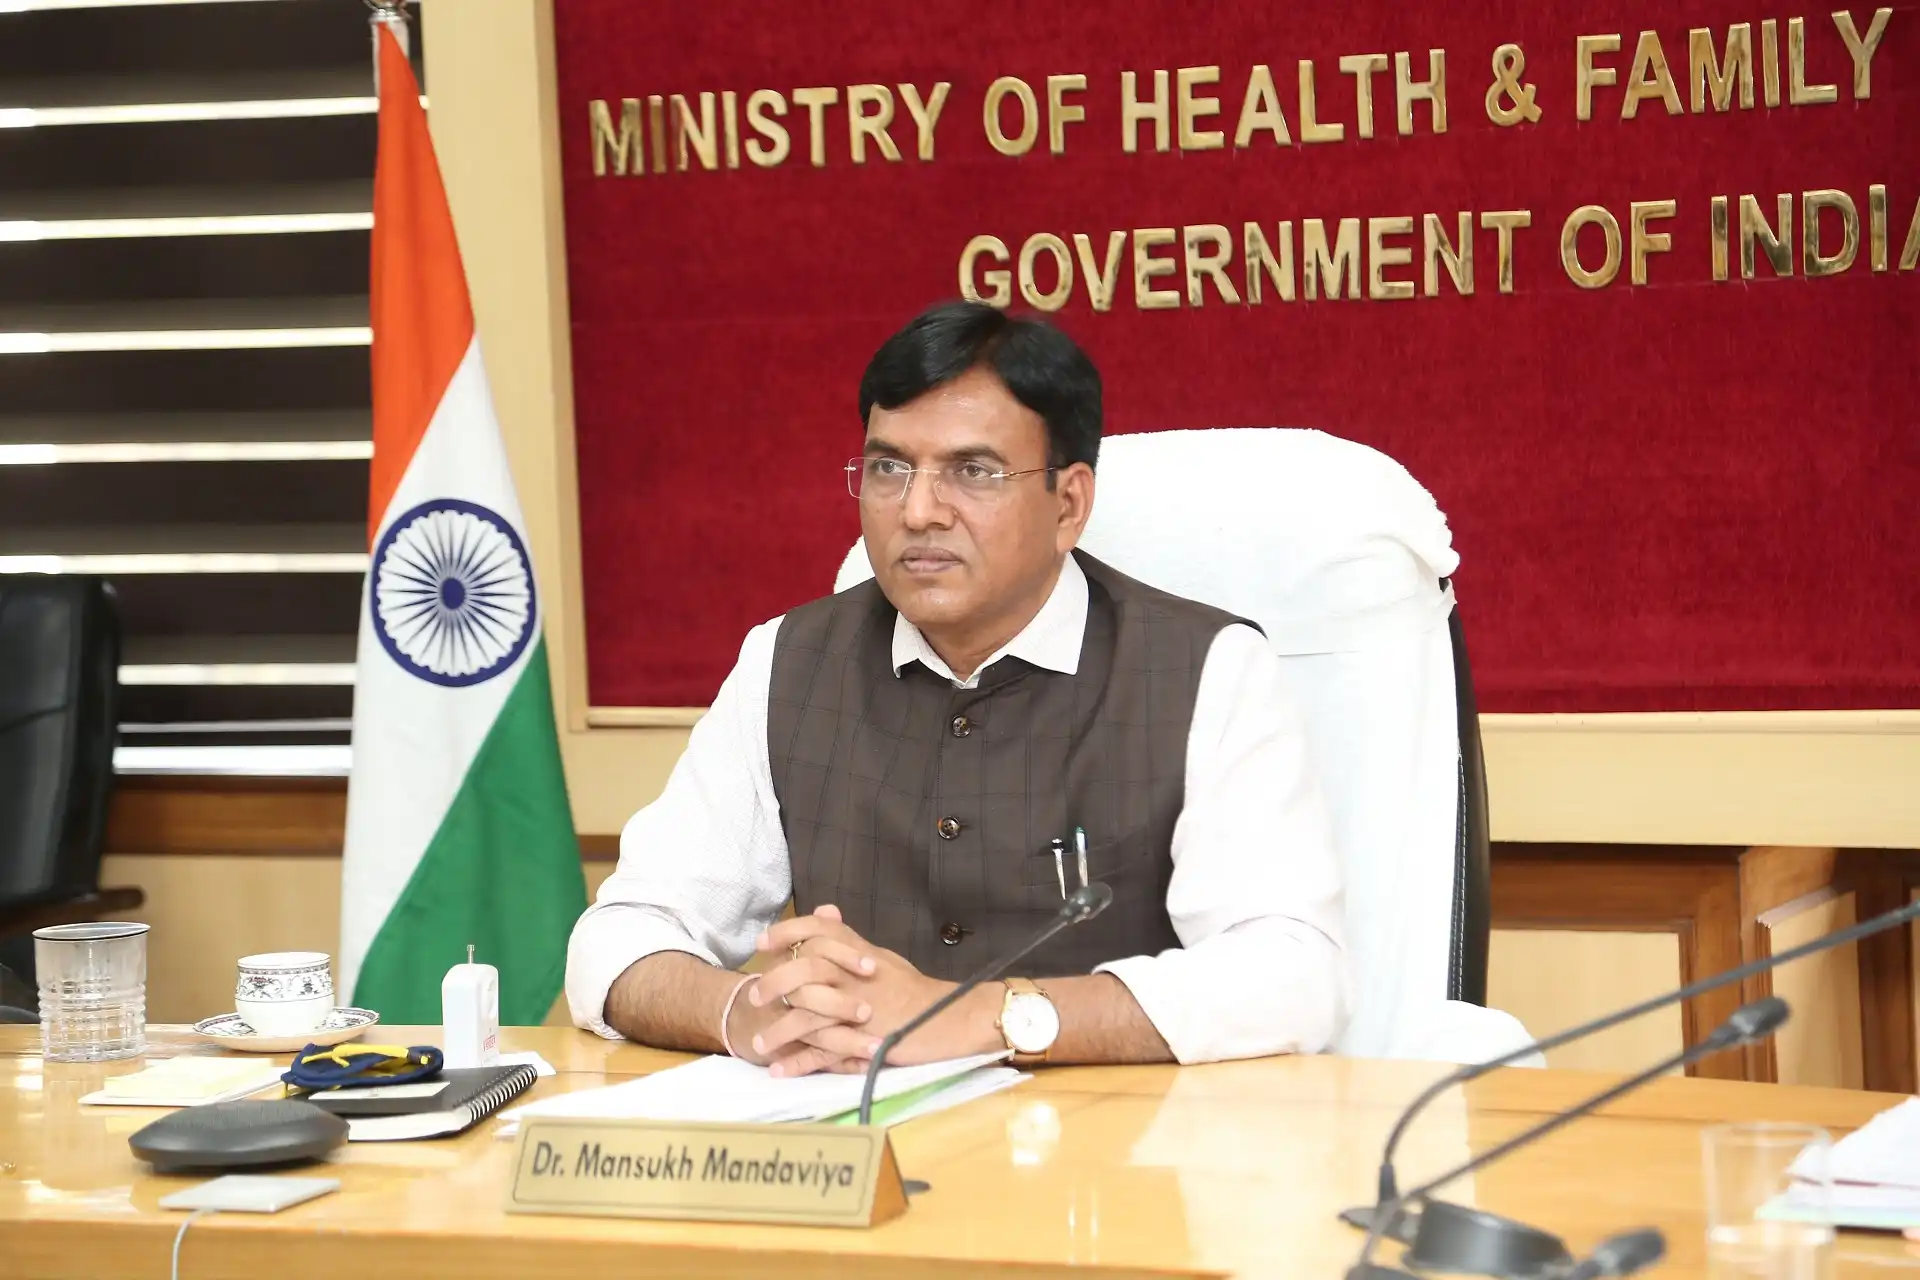 Mansukh Mandaviya - Minister of Health and Family Welfare of India